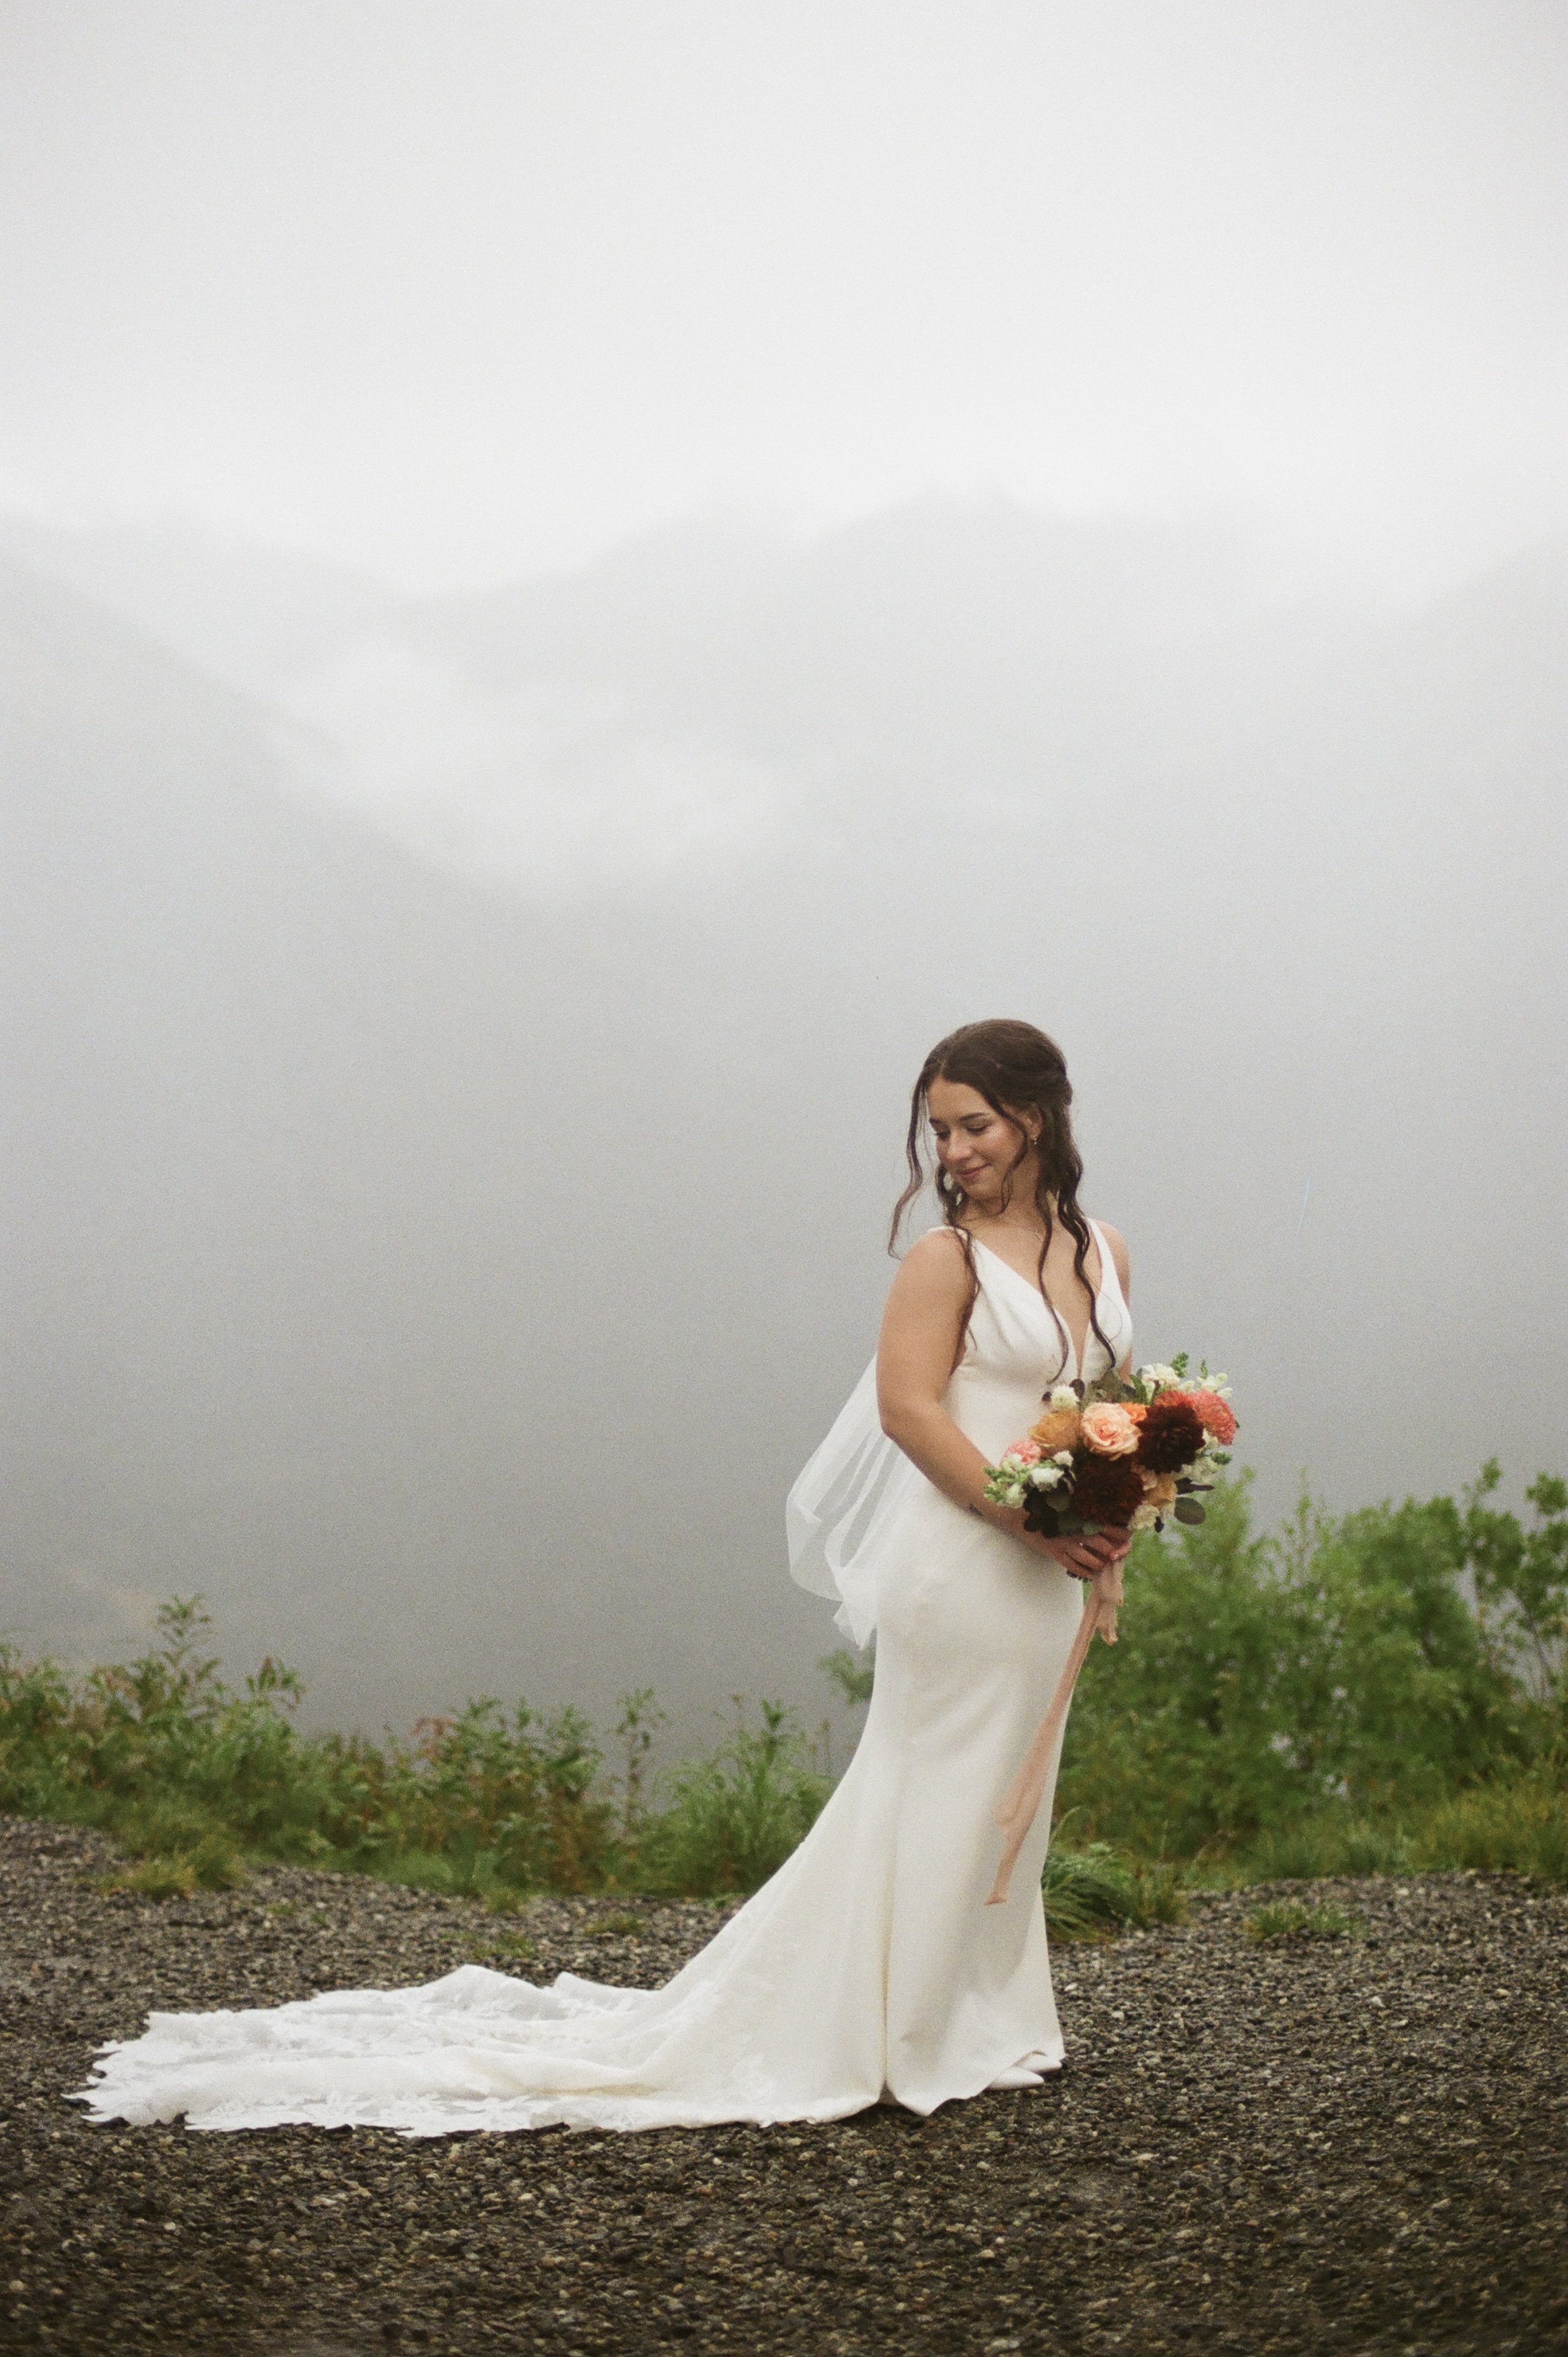 ELEGANT RAINY WEDDING IN THE MOUNTAINS OF GIRDWOOD, ALASKA